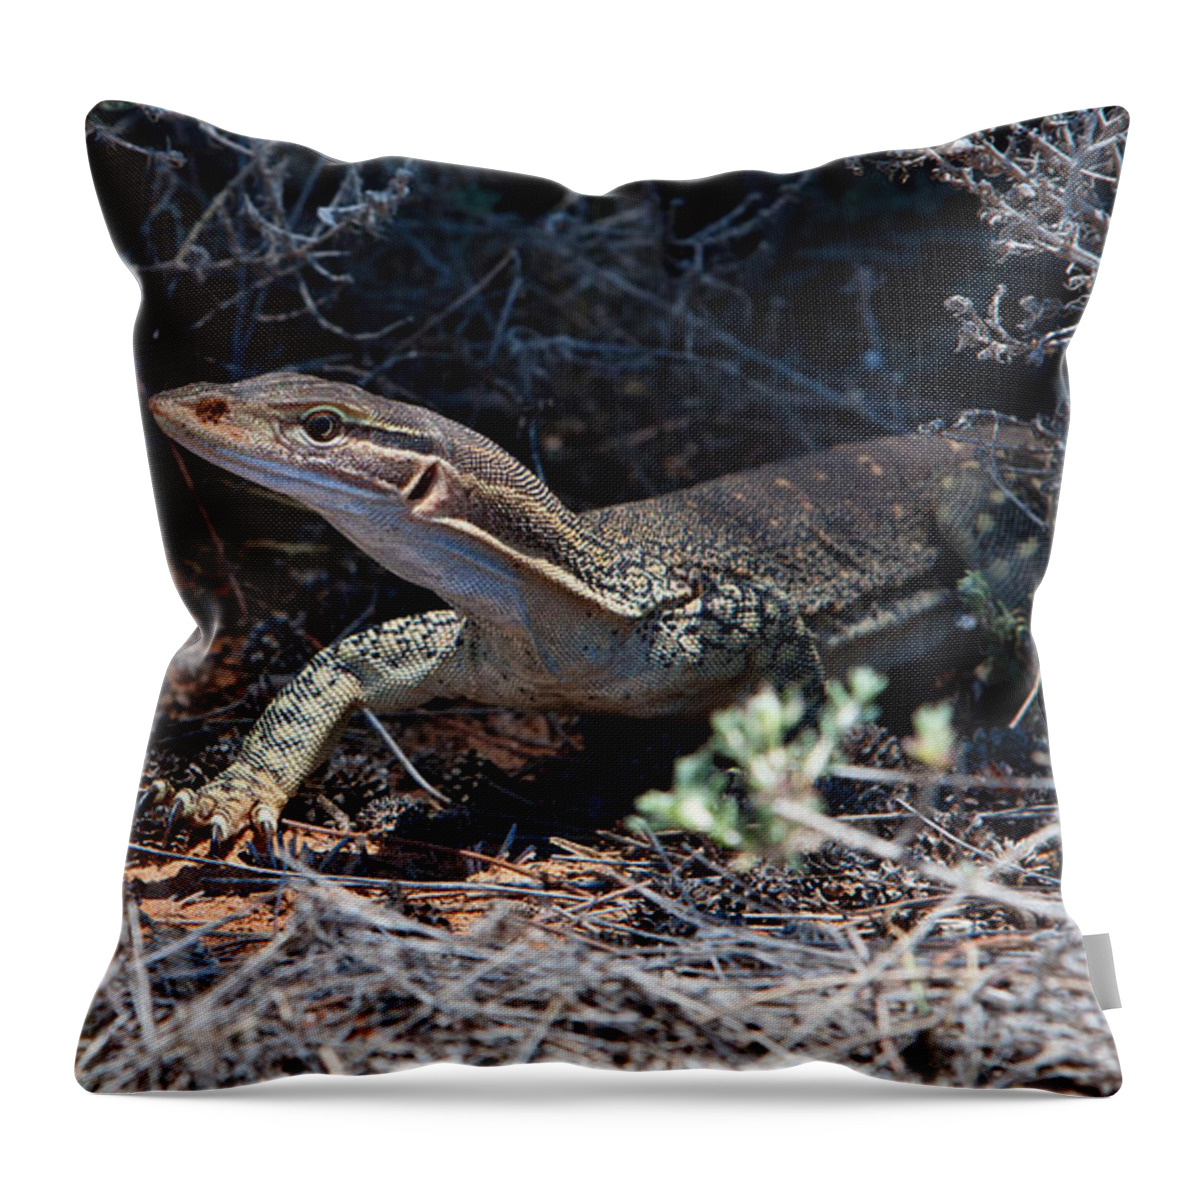 Goanna Lizard Reptile Australian Native Wildlife Outback Lake Mungo Throw Pillow featuring the photograph Goanna by Bill Robinson